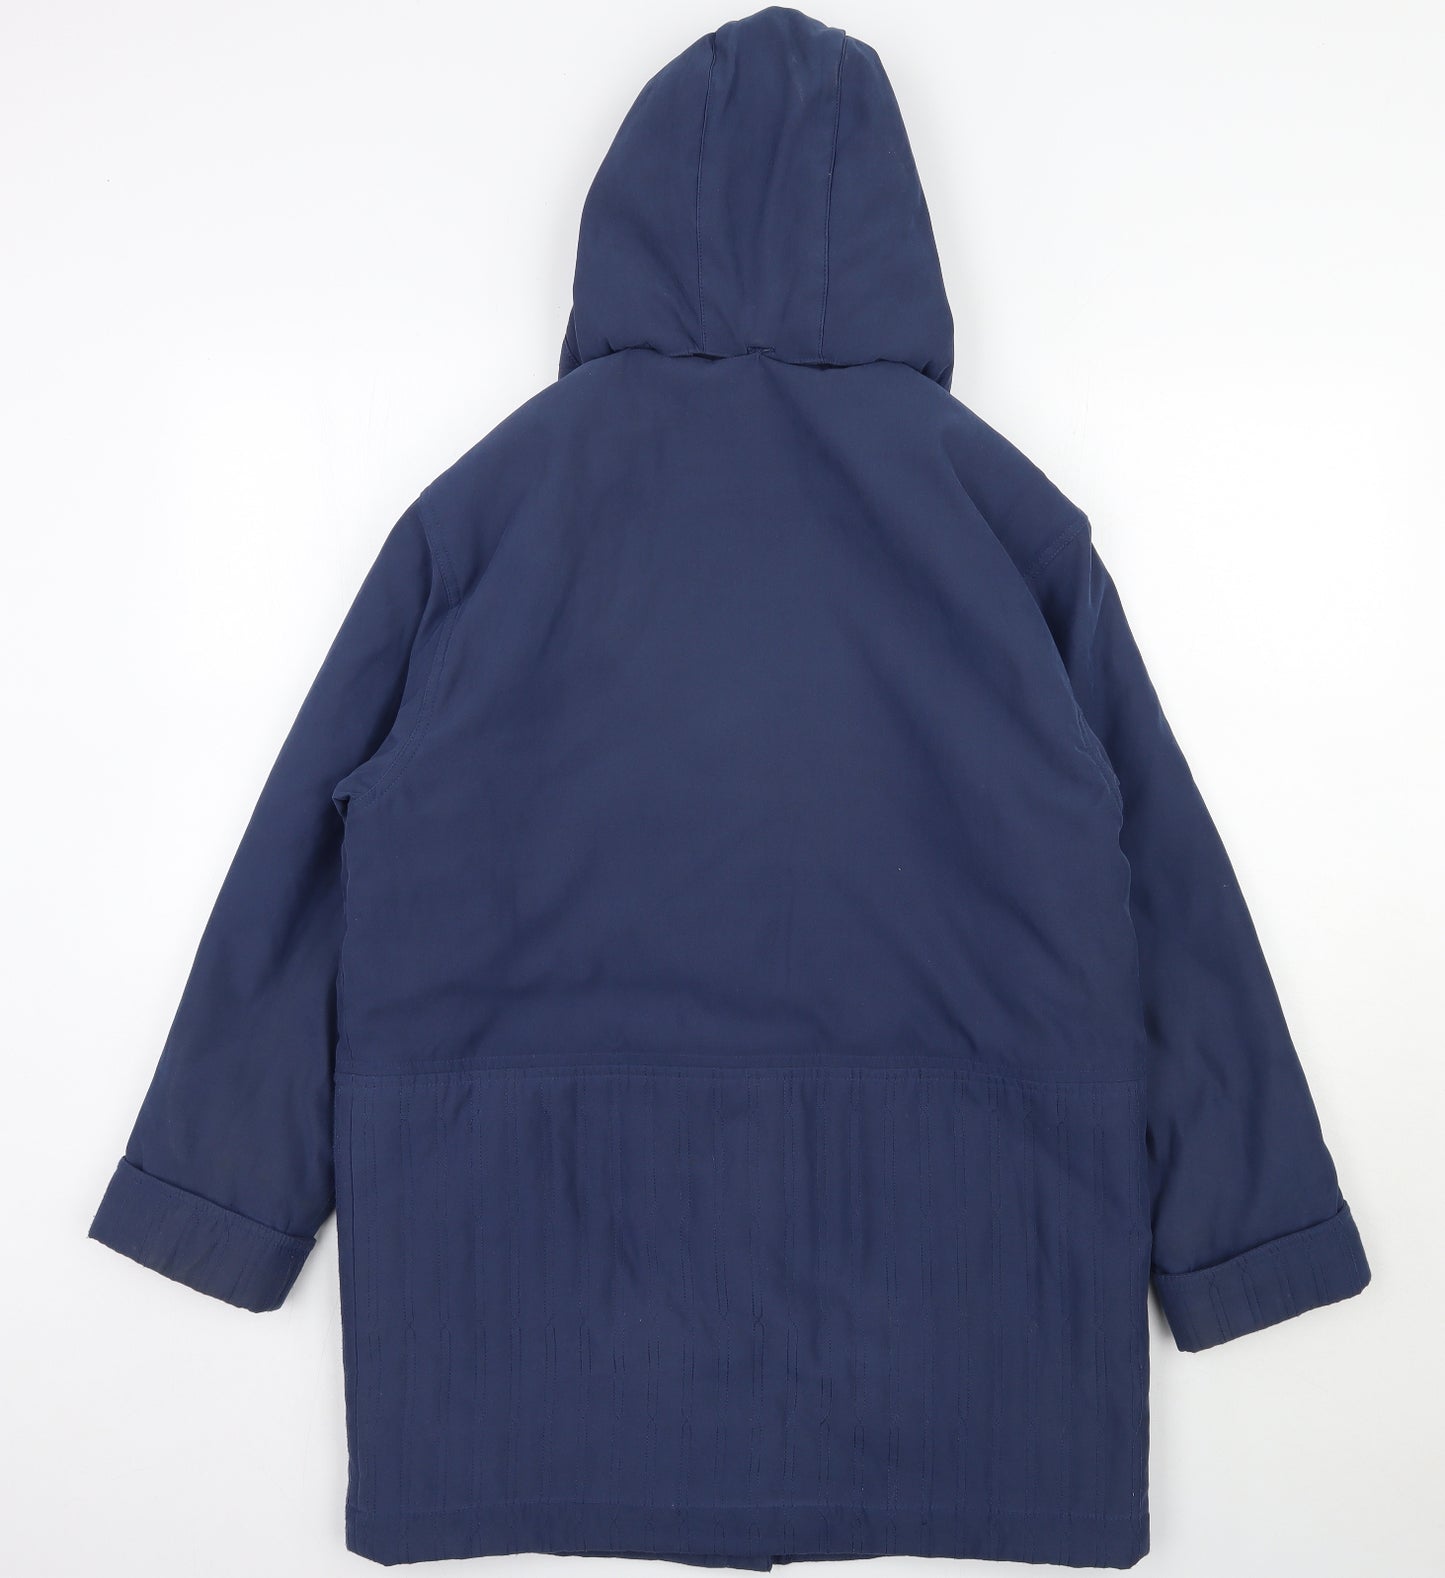 Astraka Womens Blue   Jacket Coat Size S  Zip